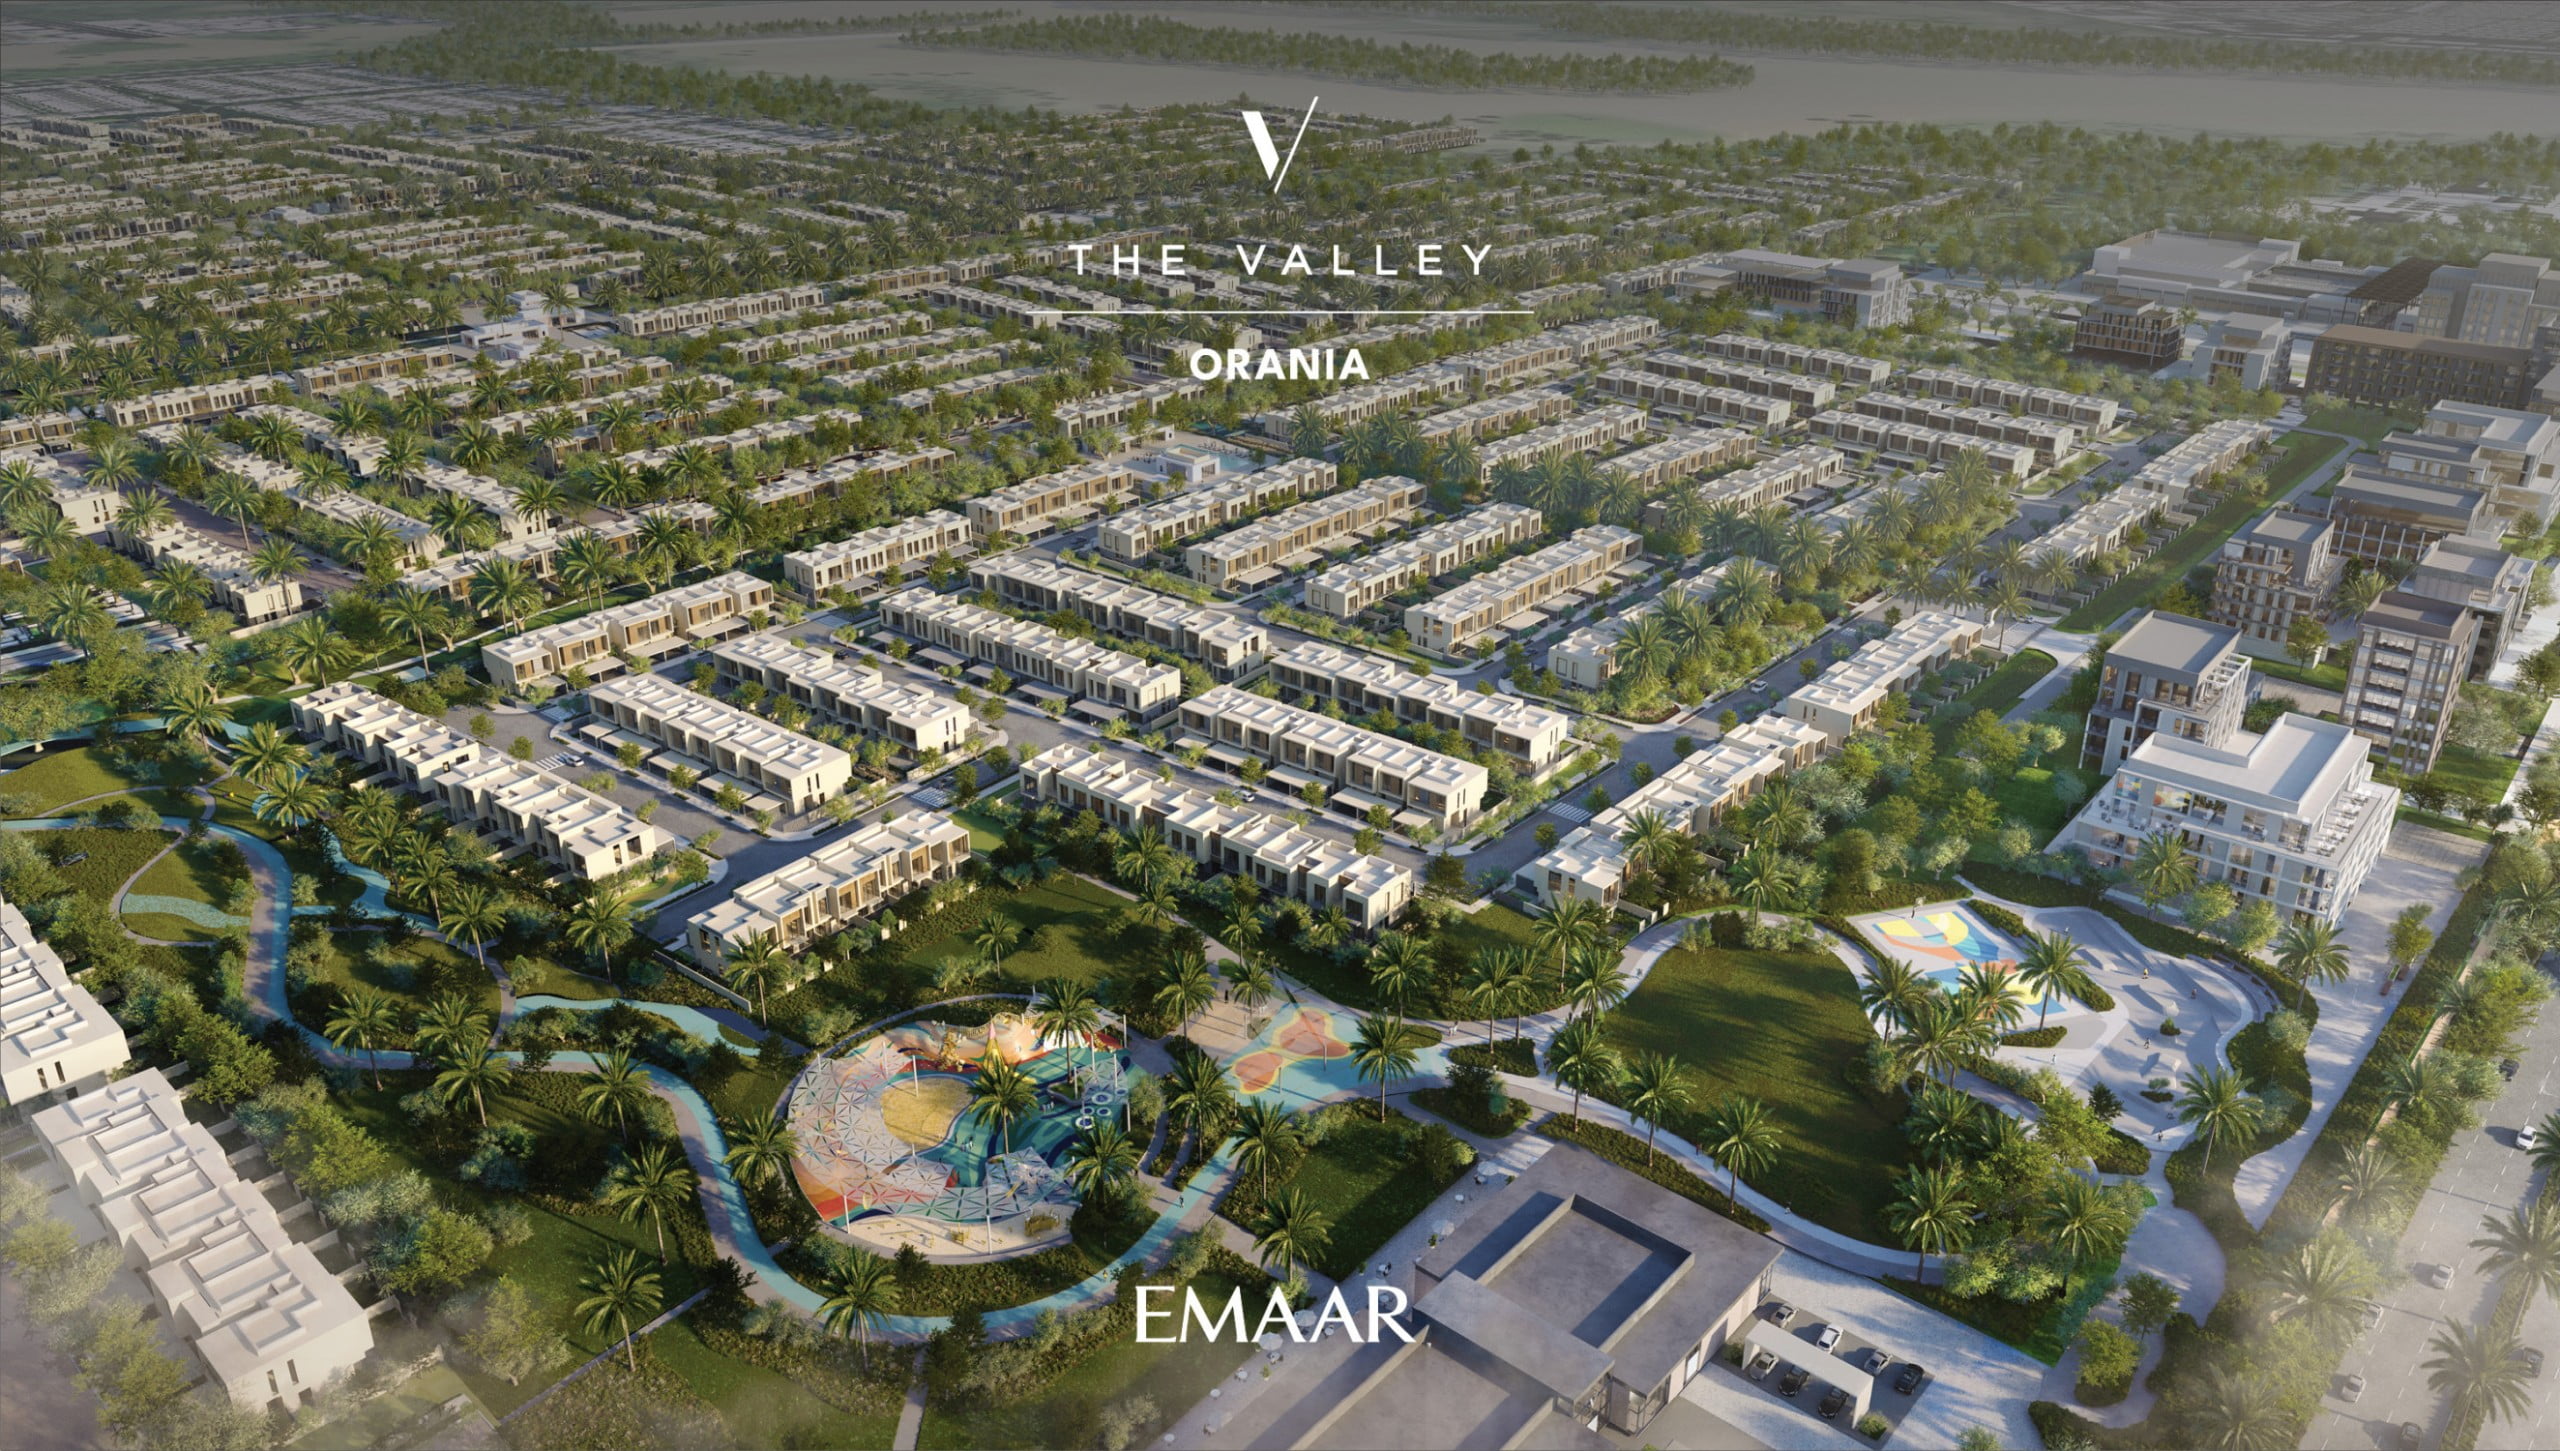 ORANIA THE VALLEY EMAAR 02 scaled - Immobilier Dubai